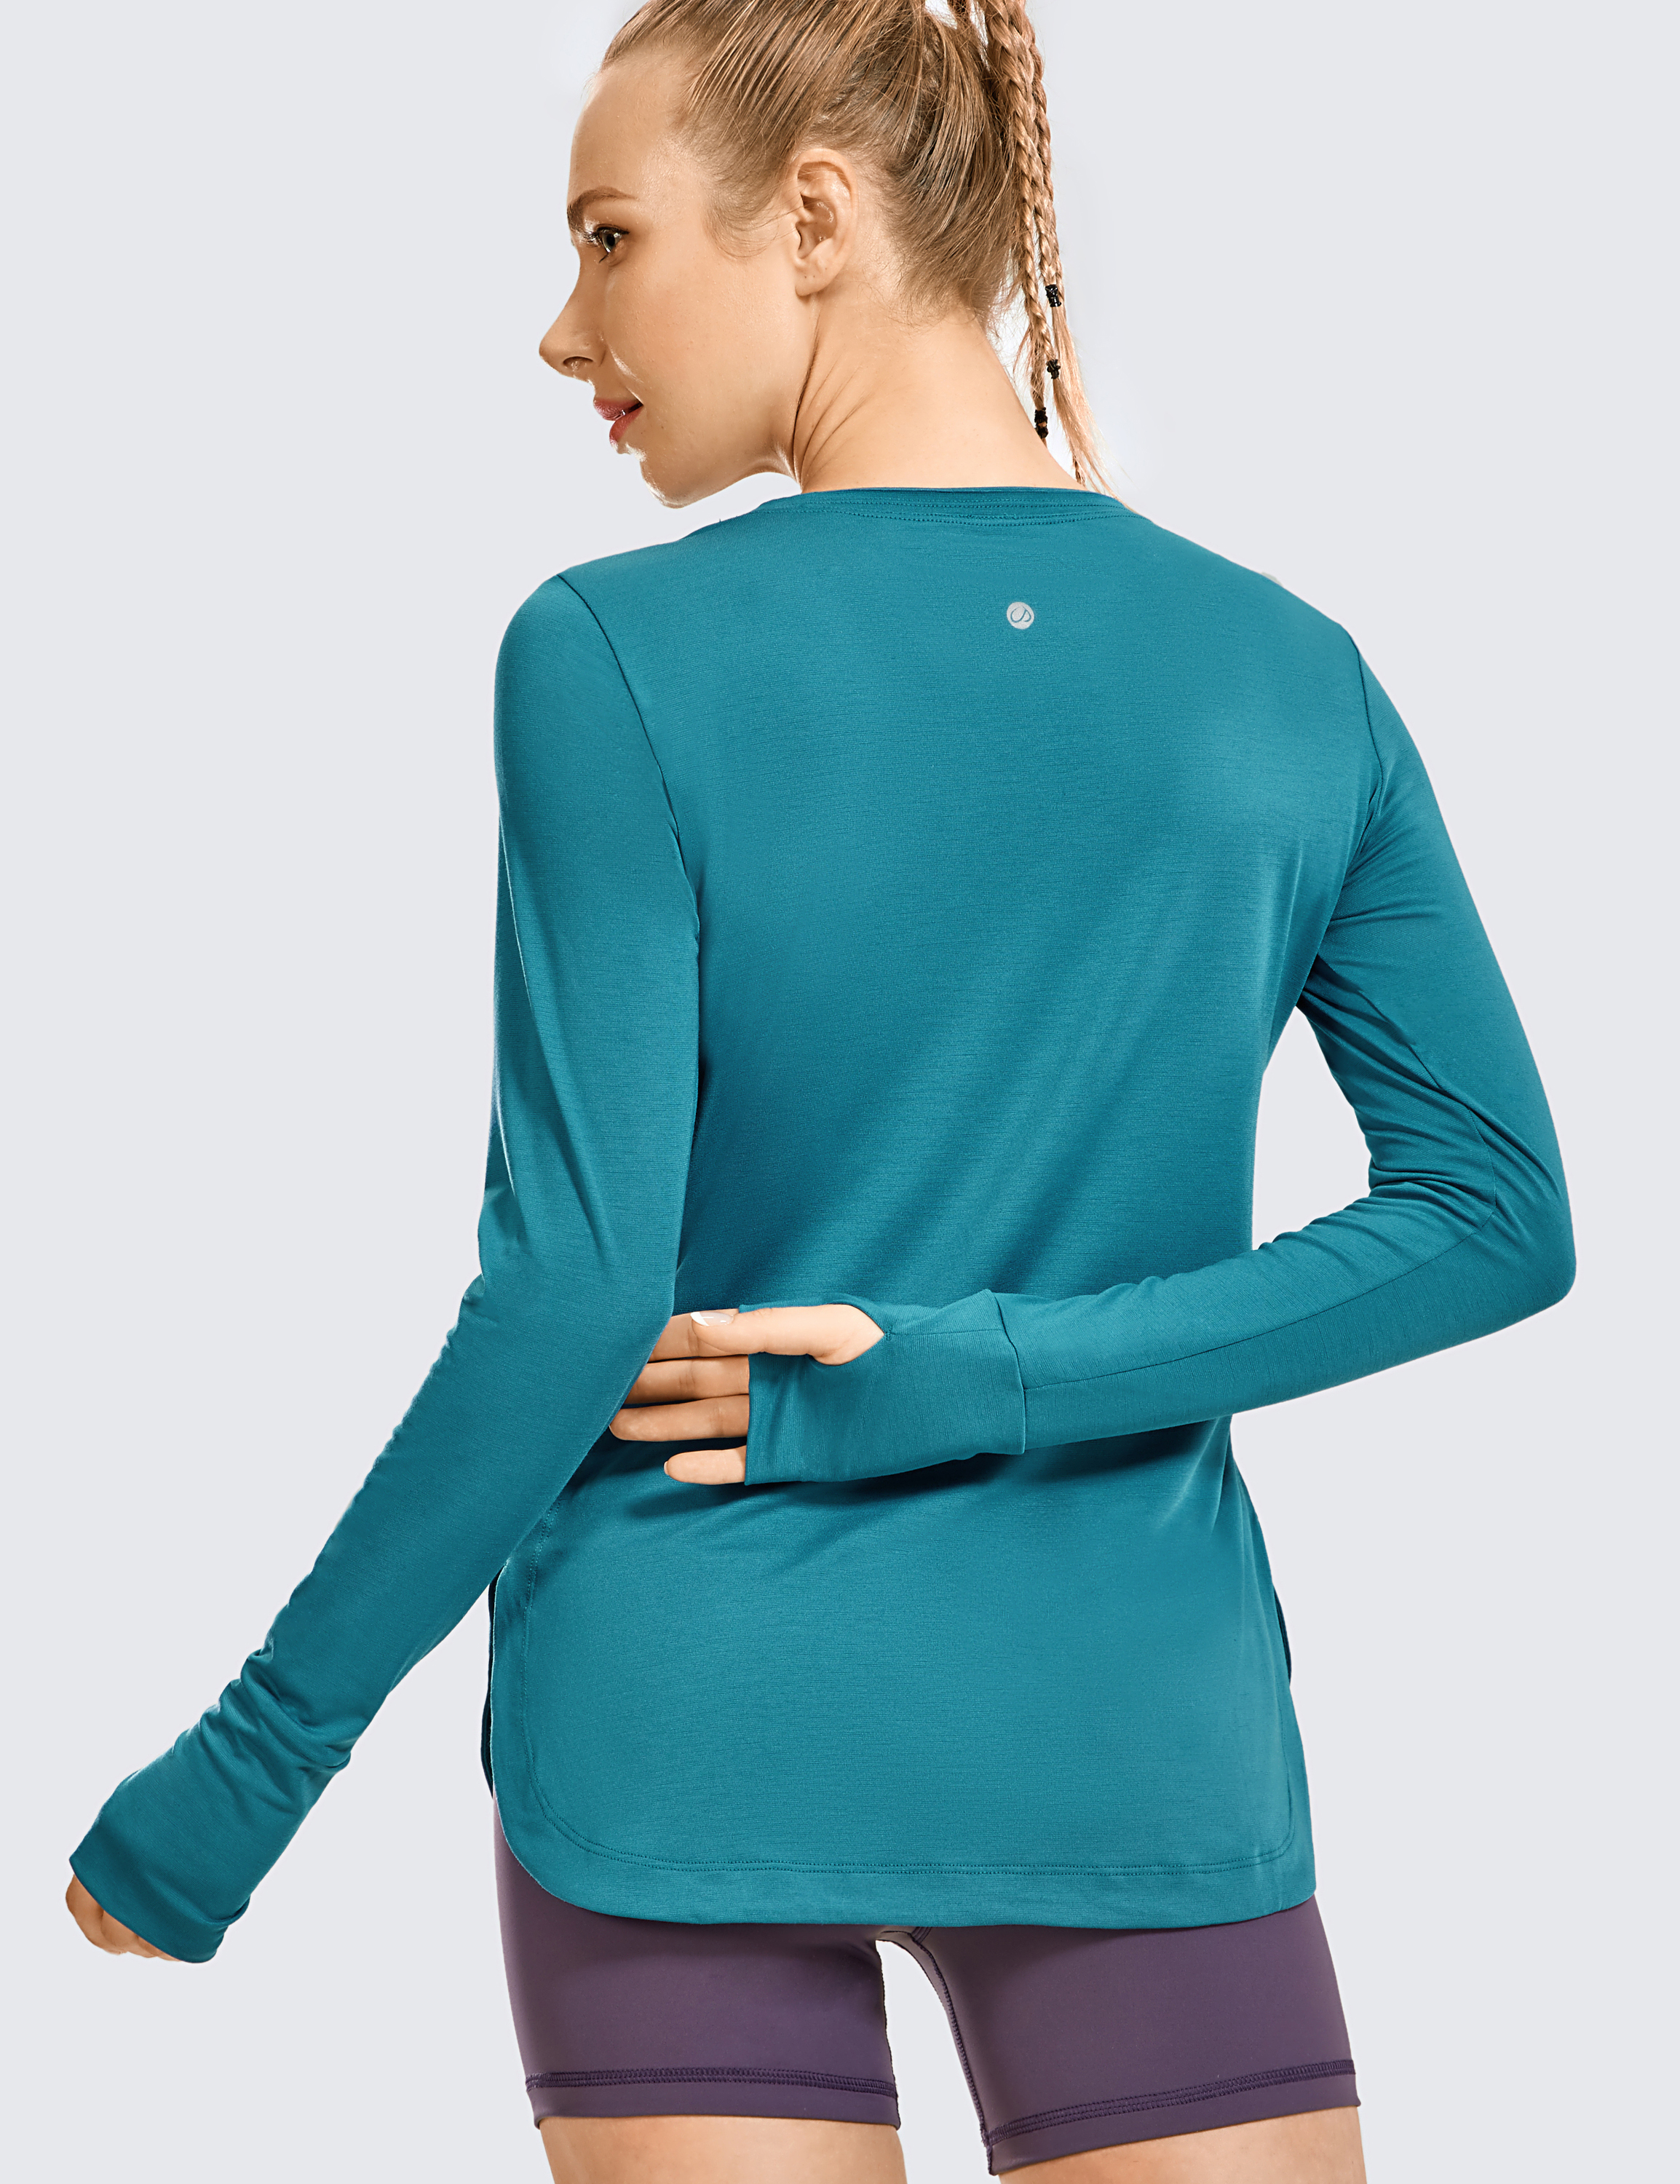 Crz Yoga Women Sport Shirt Hiking Running Workout Long Sleeve Top With